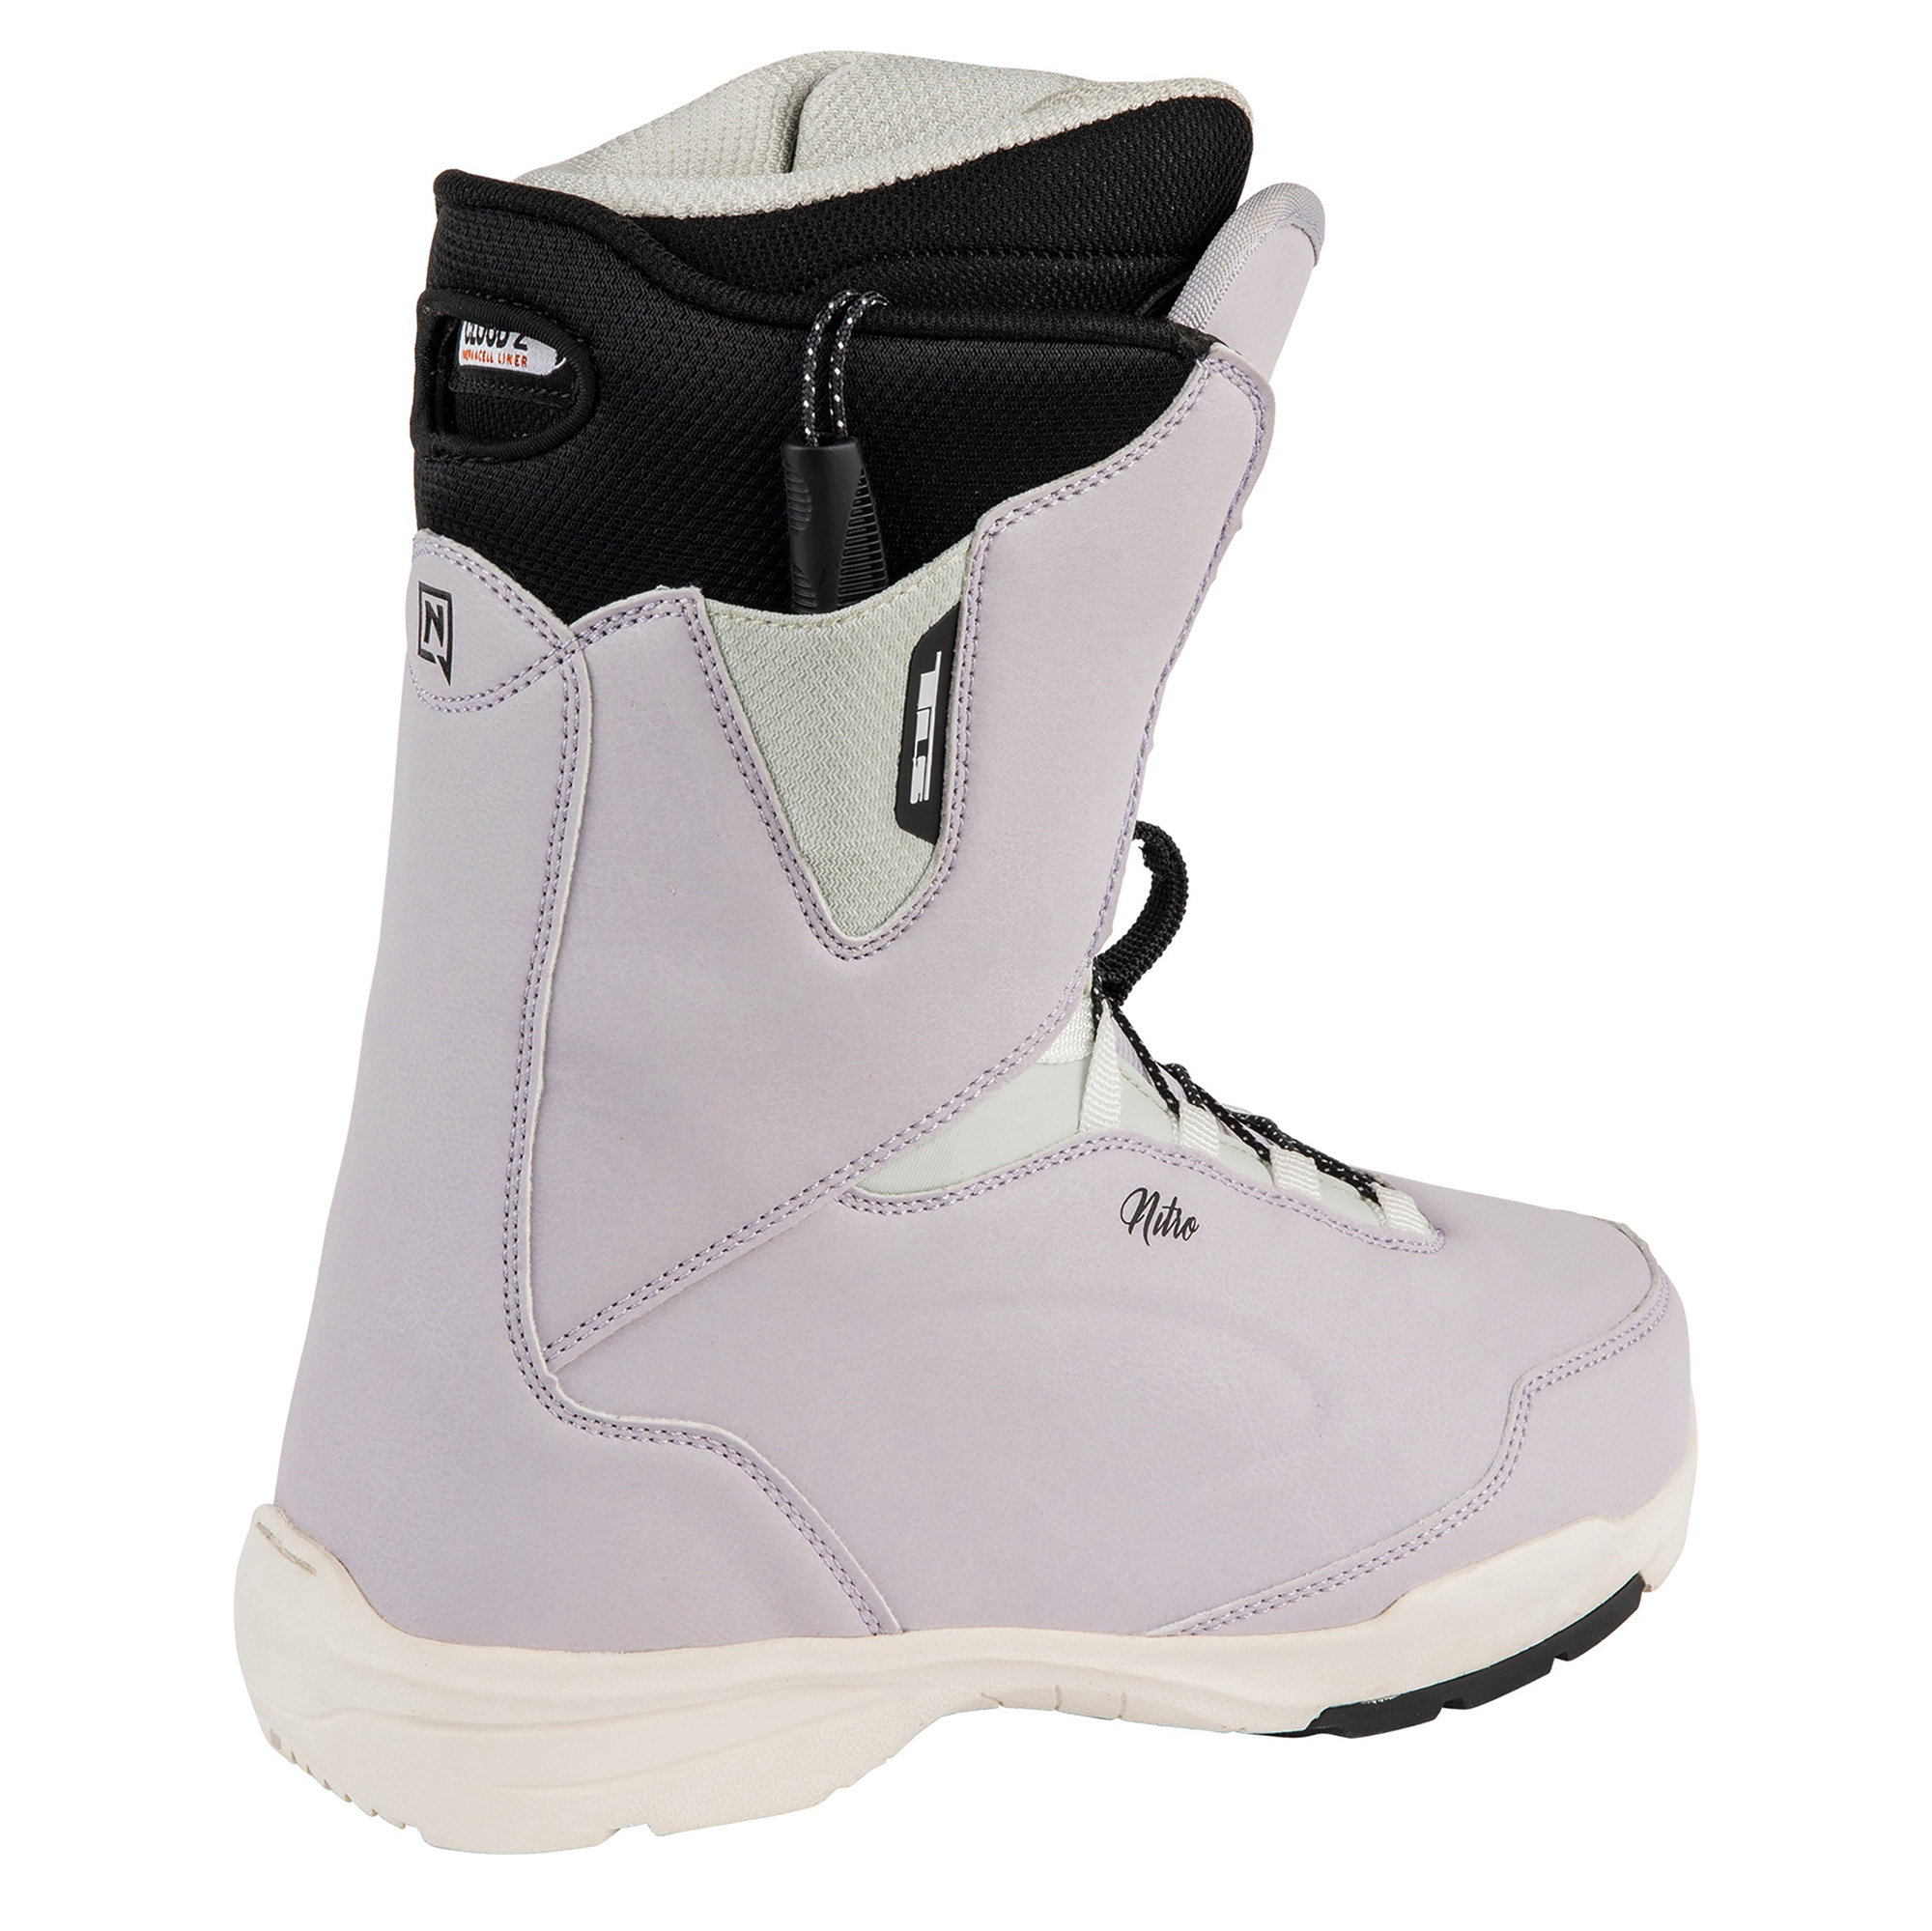 Nitro Scala TLS Women's Snowboard Boots